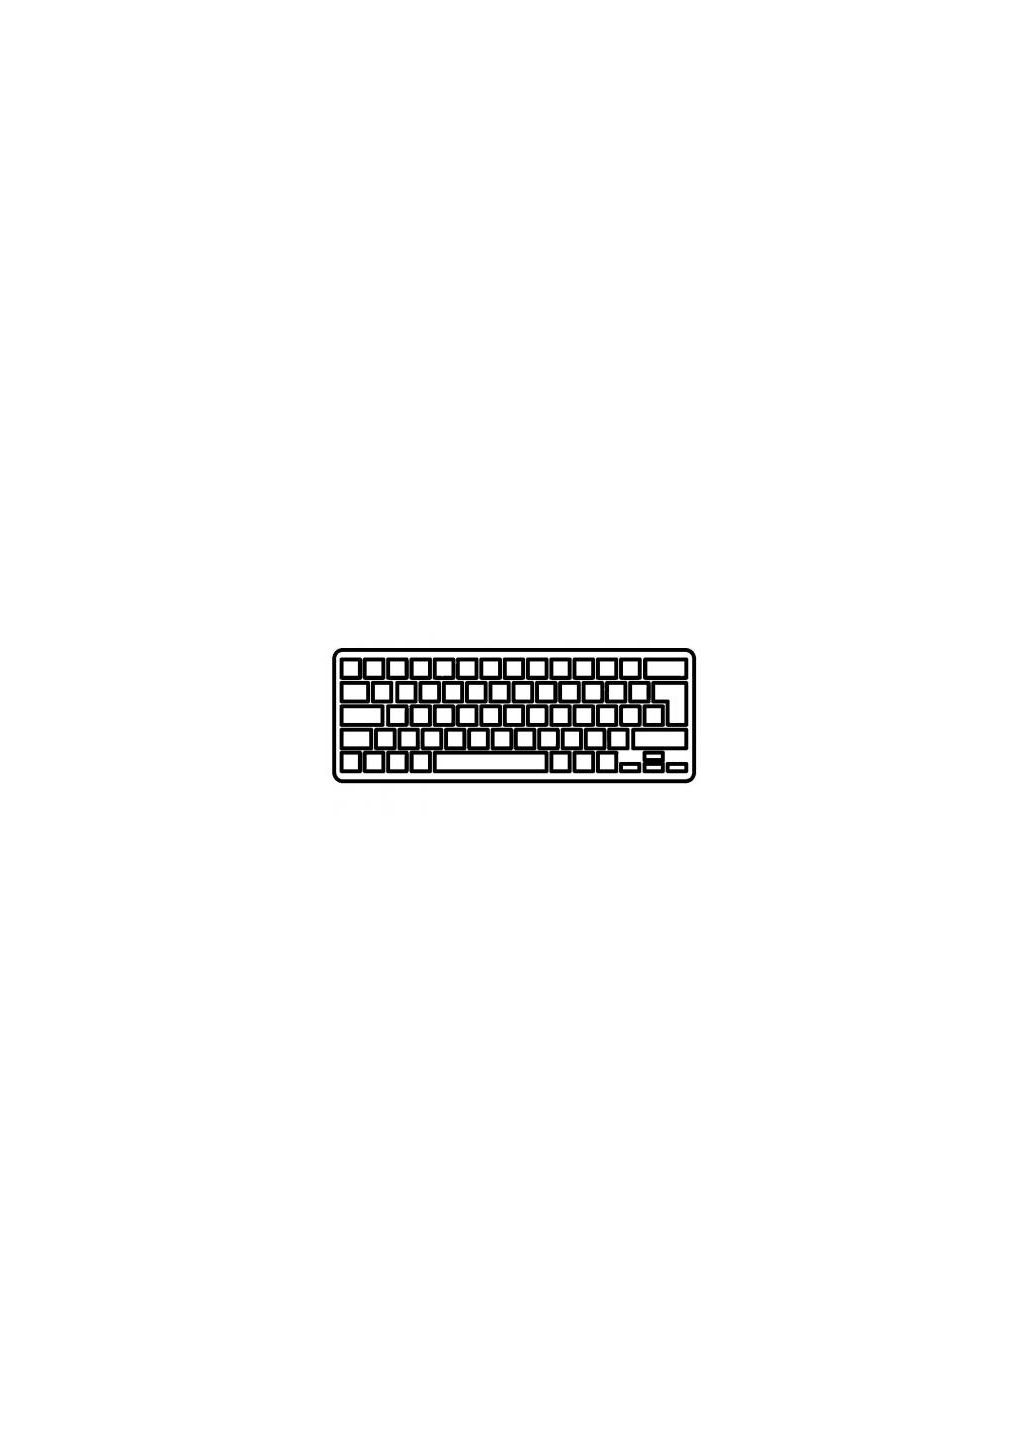 Клавиатура ноутбука Macbook Pro 15.4" A1286 (2008 года) черн. без рамки UA/RU/US (A43061) Apple macbook pro 15.4" a1286 (2008 года) черн.без рамки (276706523)